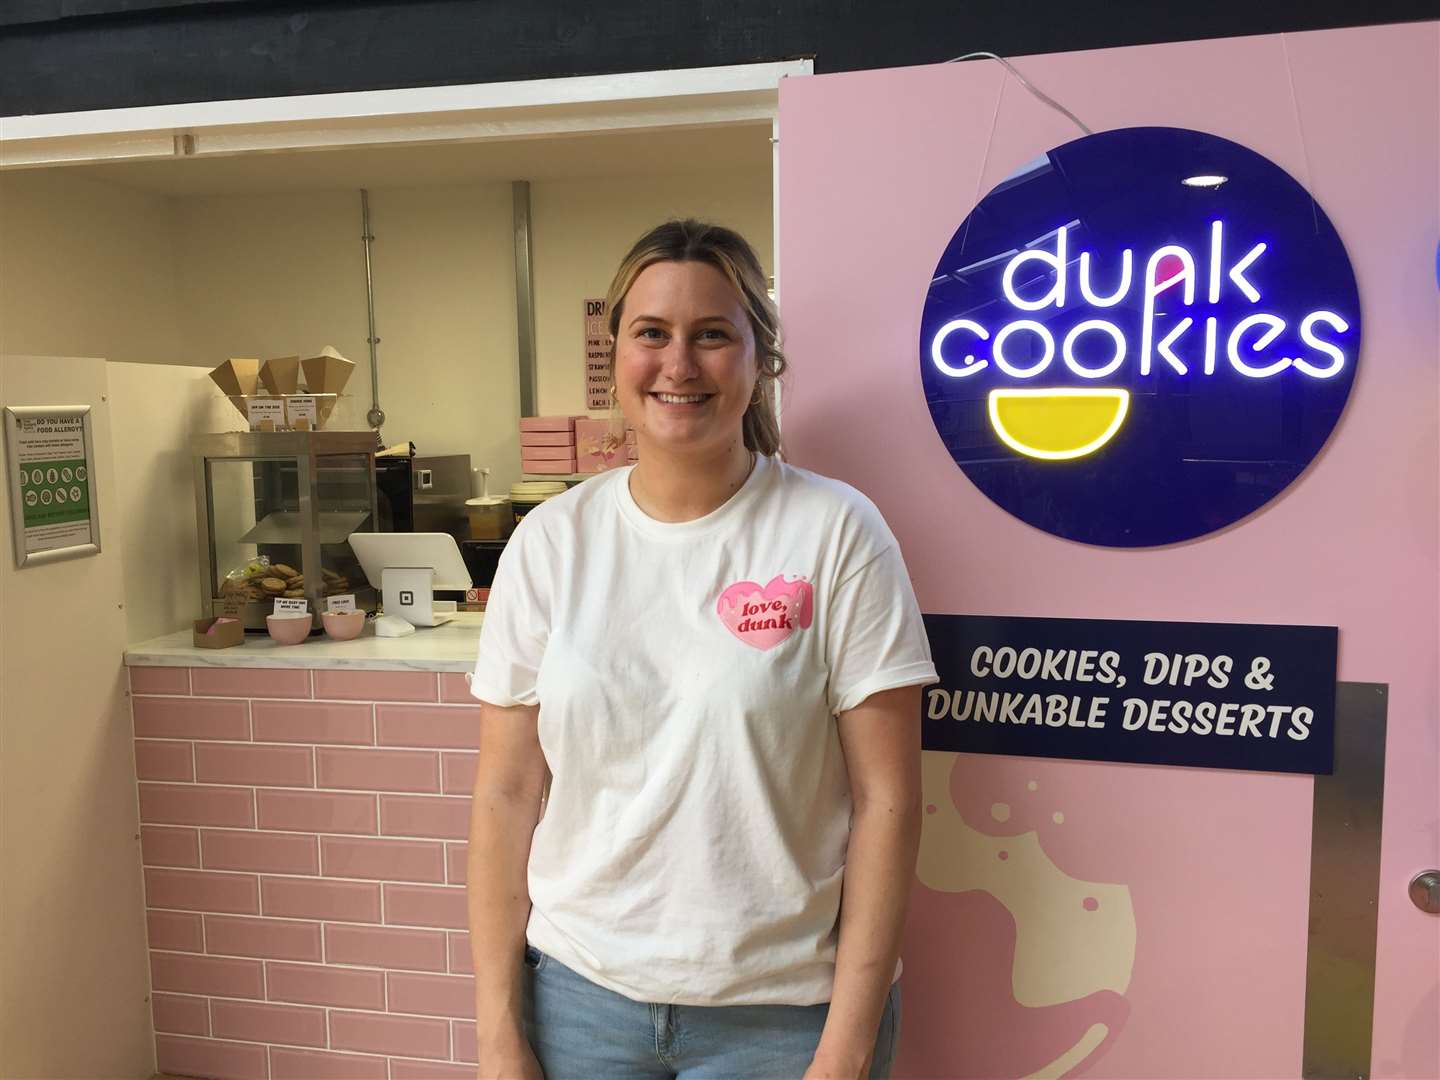 Annabelle Cox runs Dunk Cookies